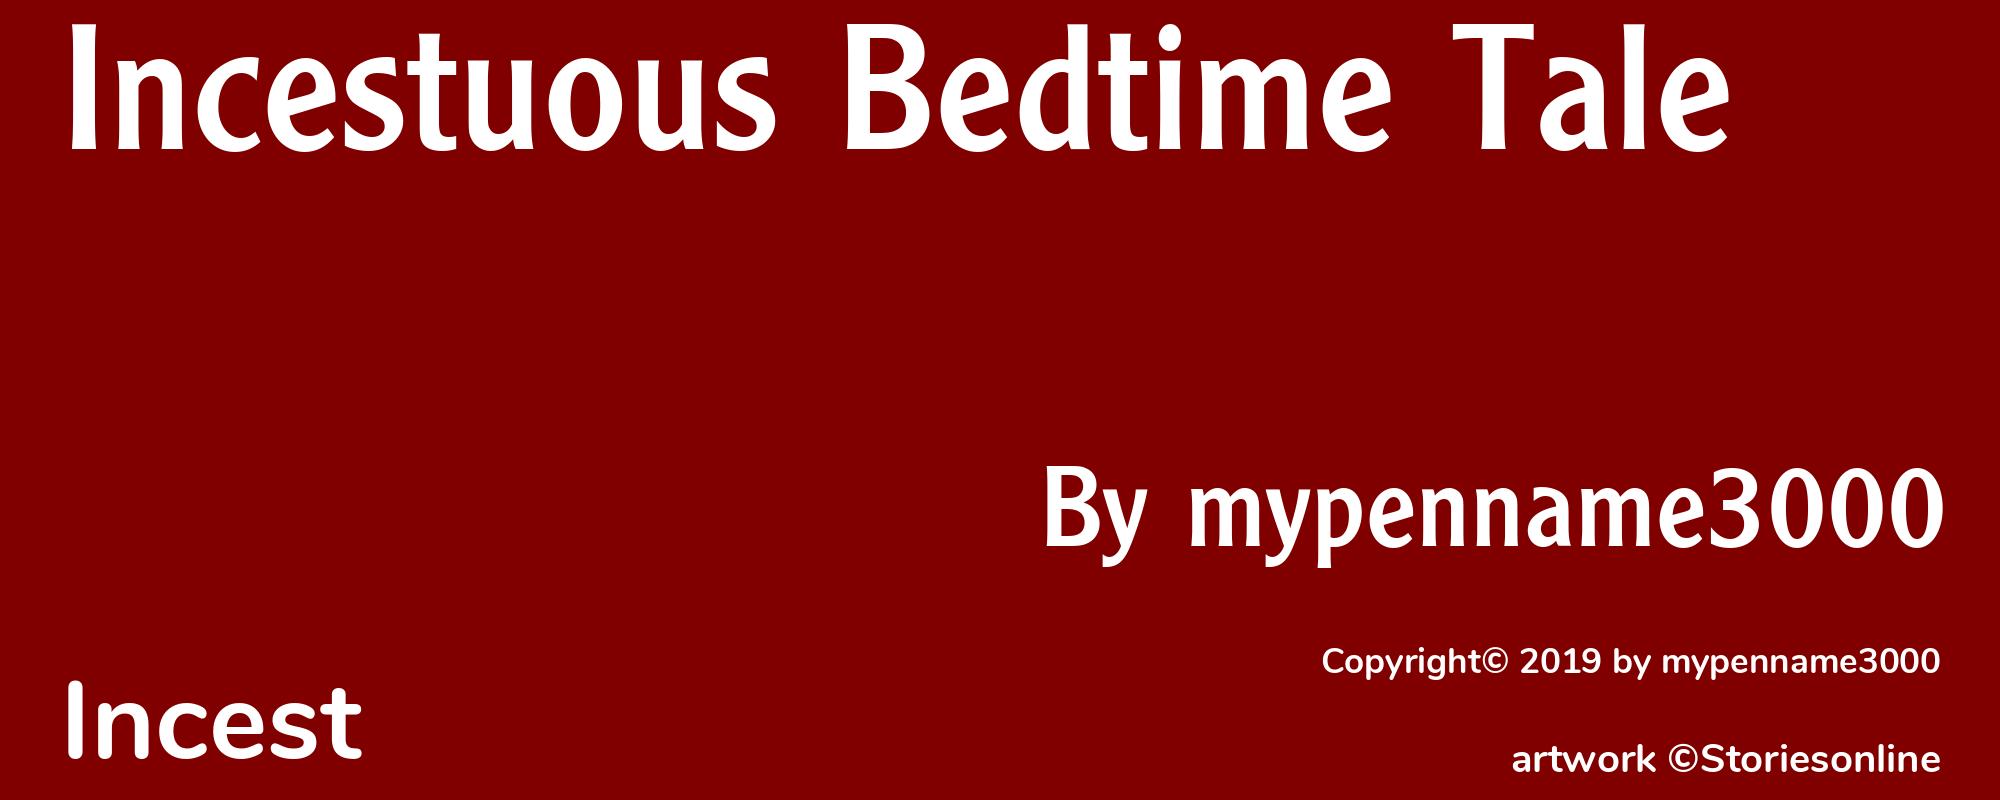 Incestuous Bedtime Tale - Cover